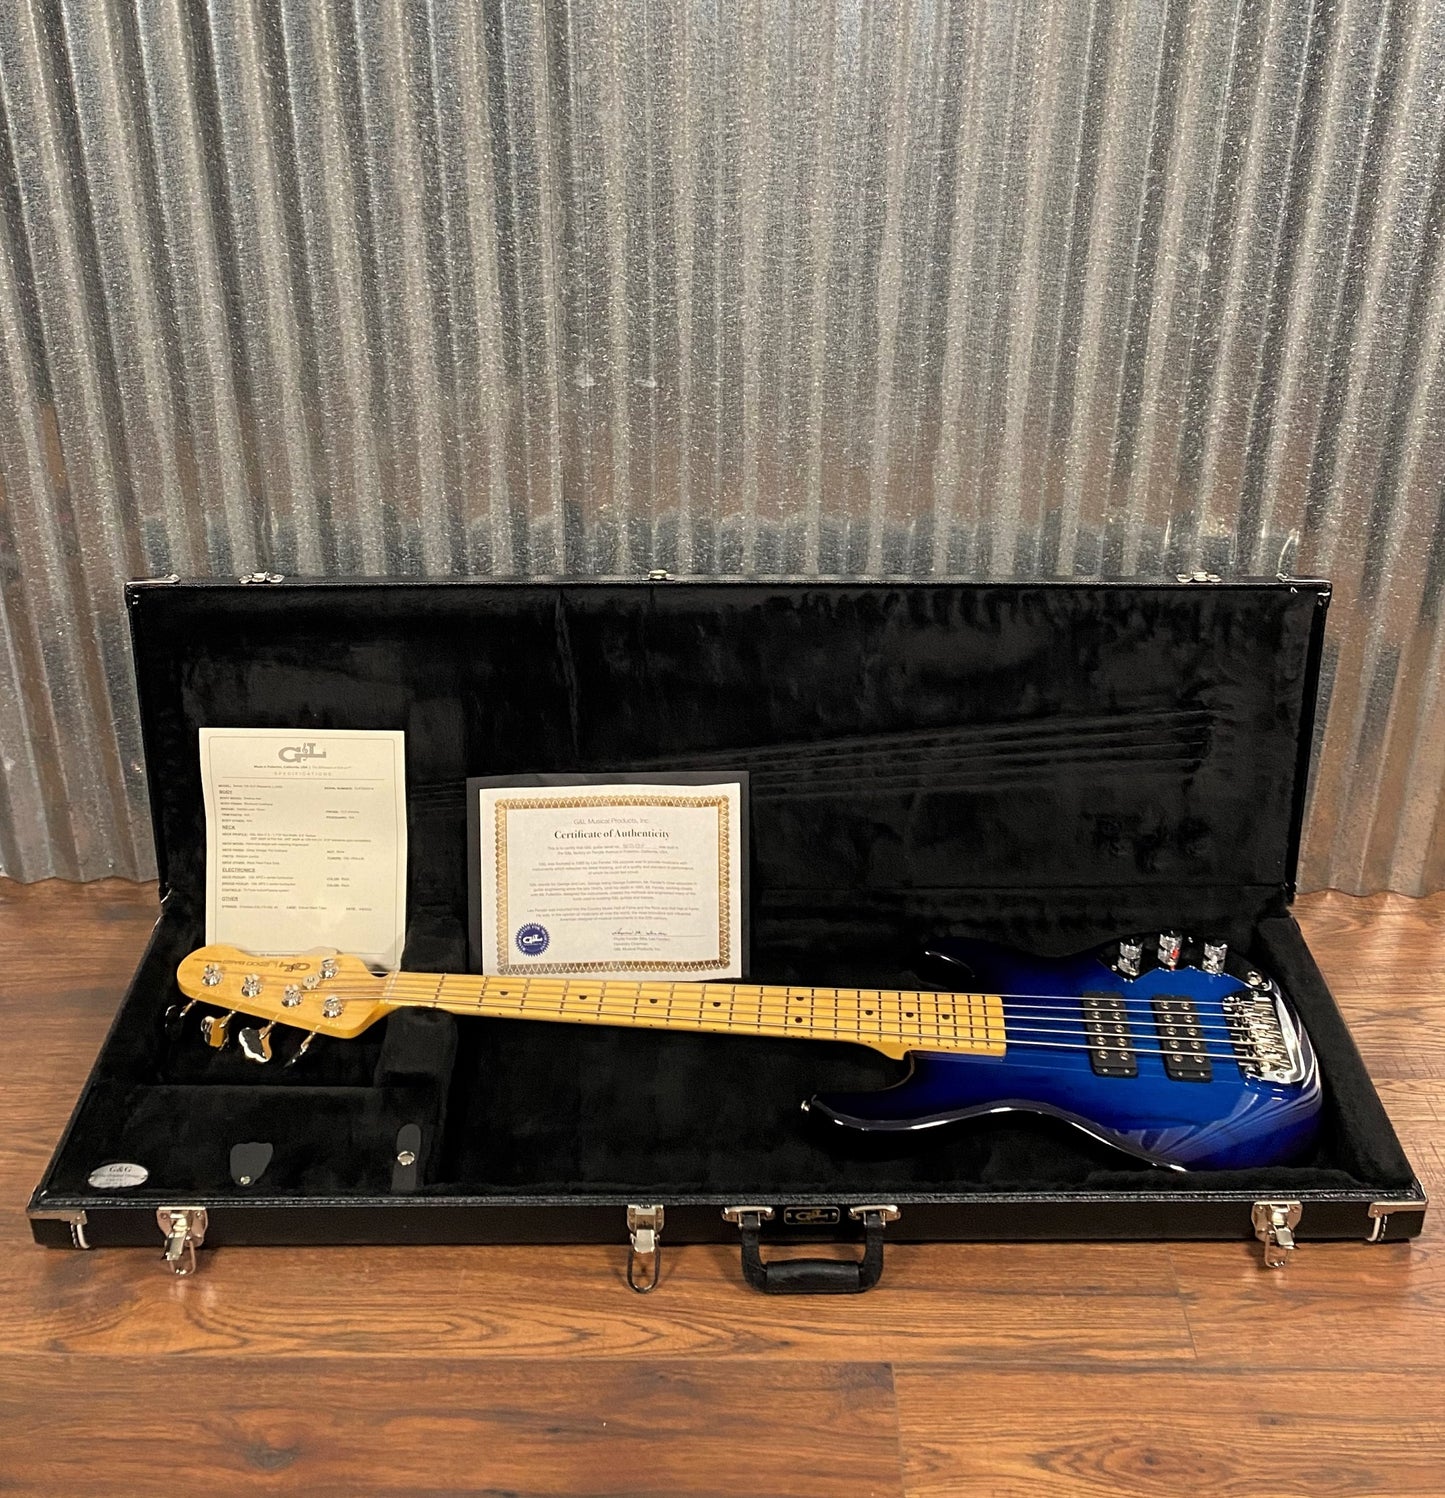 G&L USA CLF L-2500 S750 Blueburst 5 String Bass & Case #3314